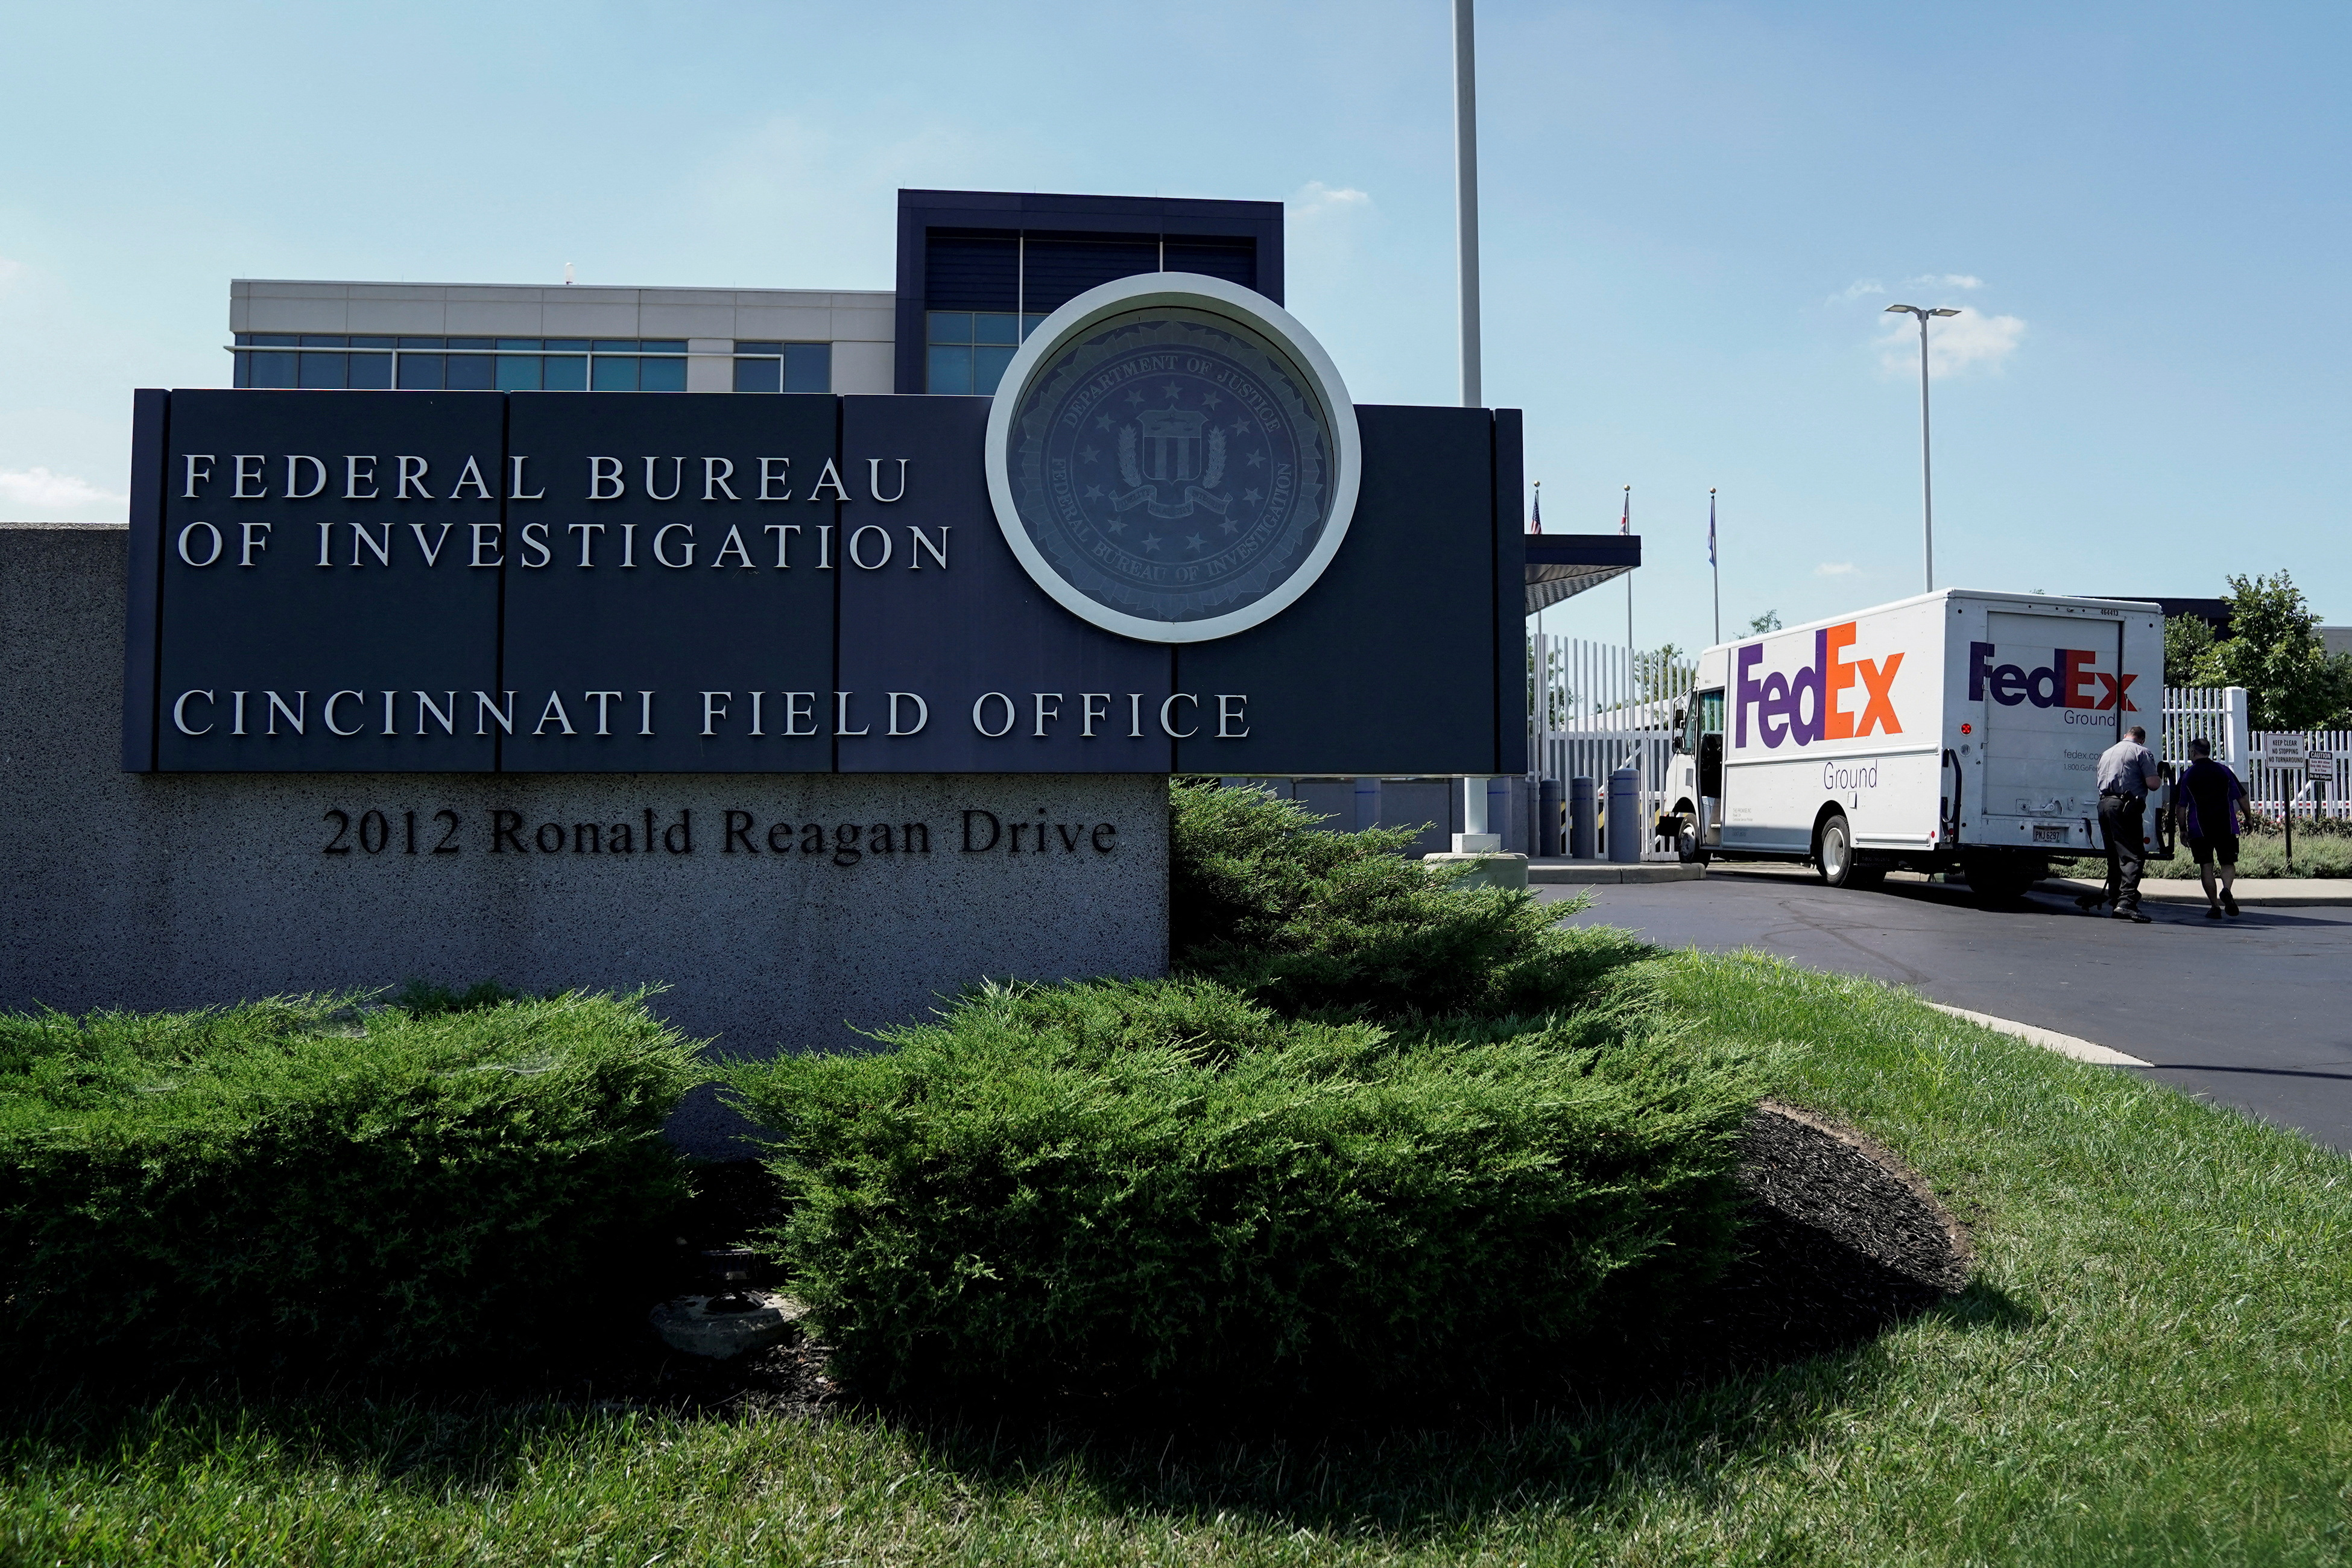 Police Identify Suspect who Tried to Breach Ohio FBI building